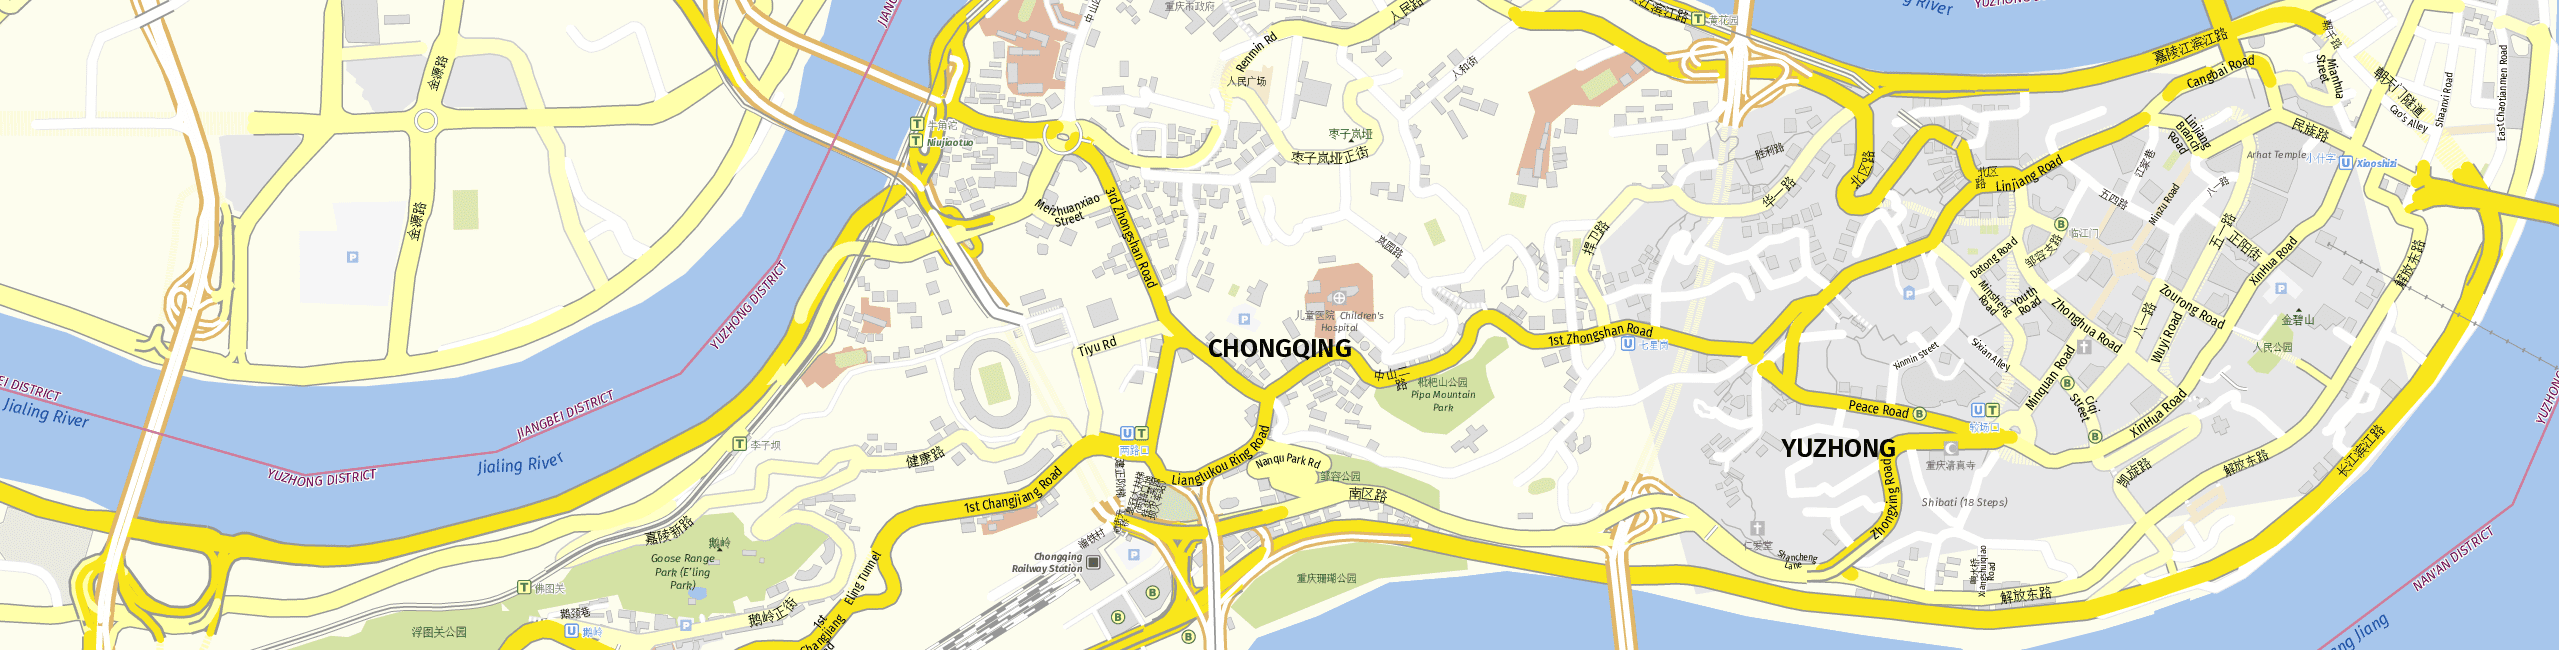 Stadtplan Chongqing zum Downloaden.